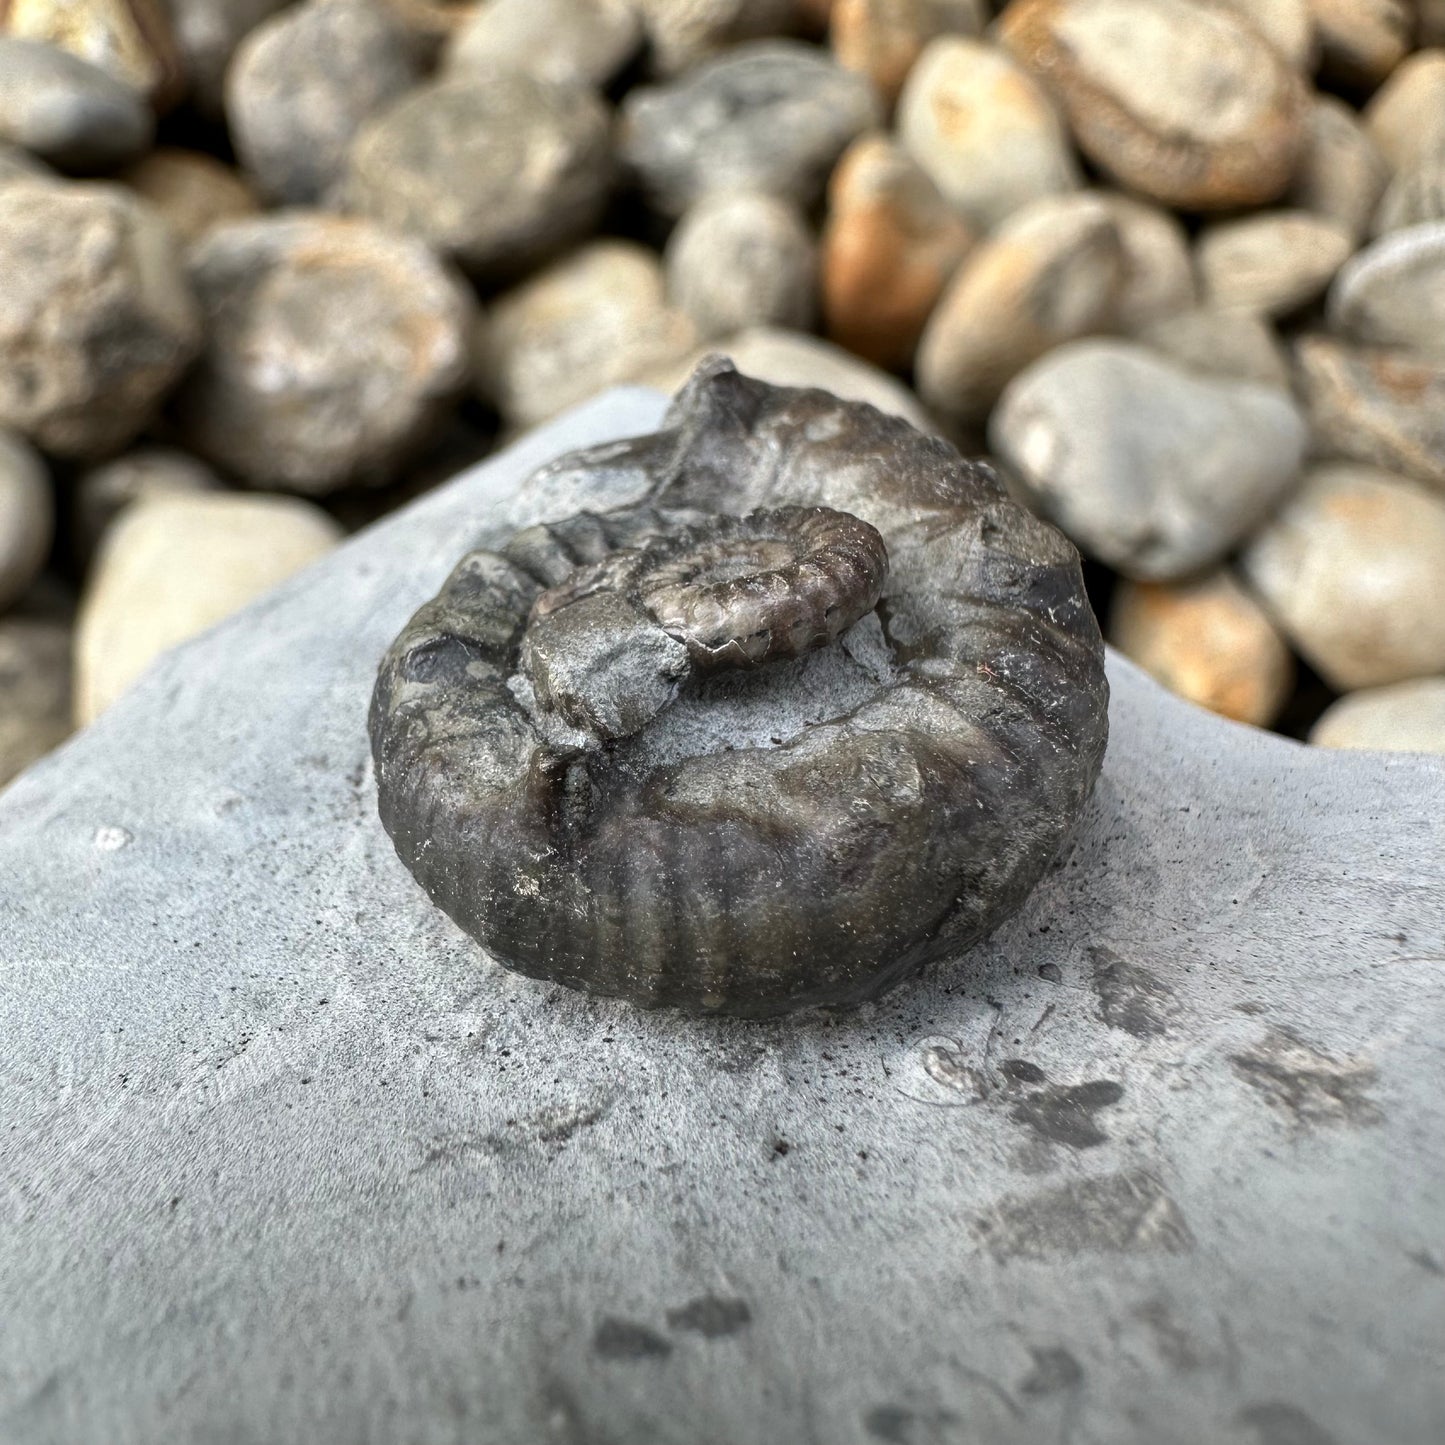 Xipheroceras / Promiceras ammonite fossil - Whitby, North Yorkshire